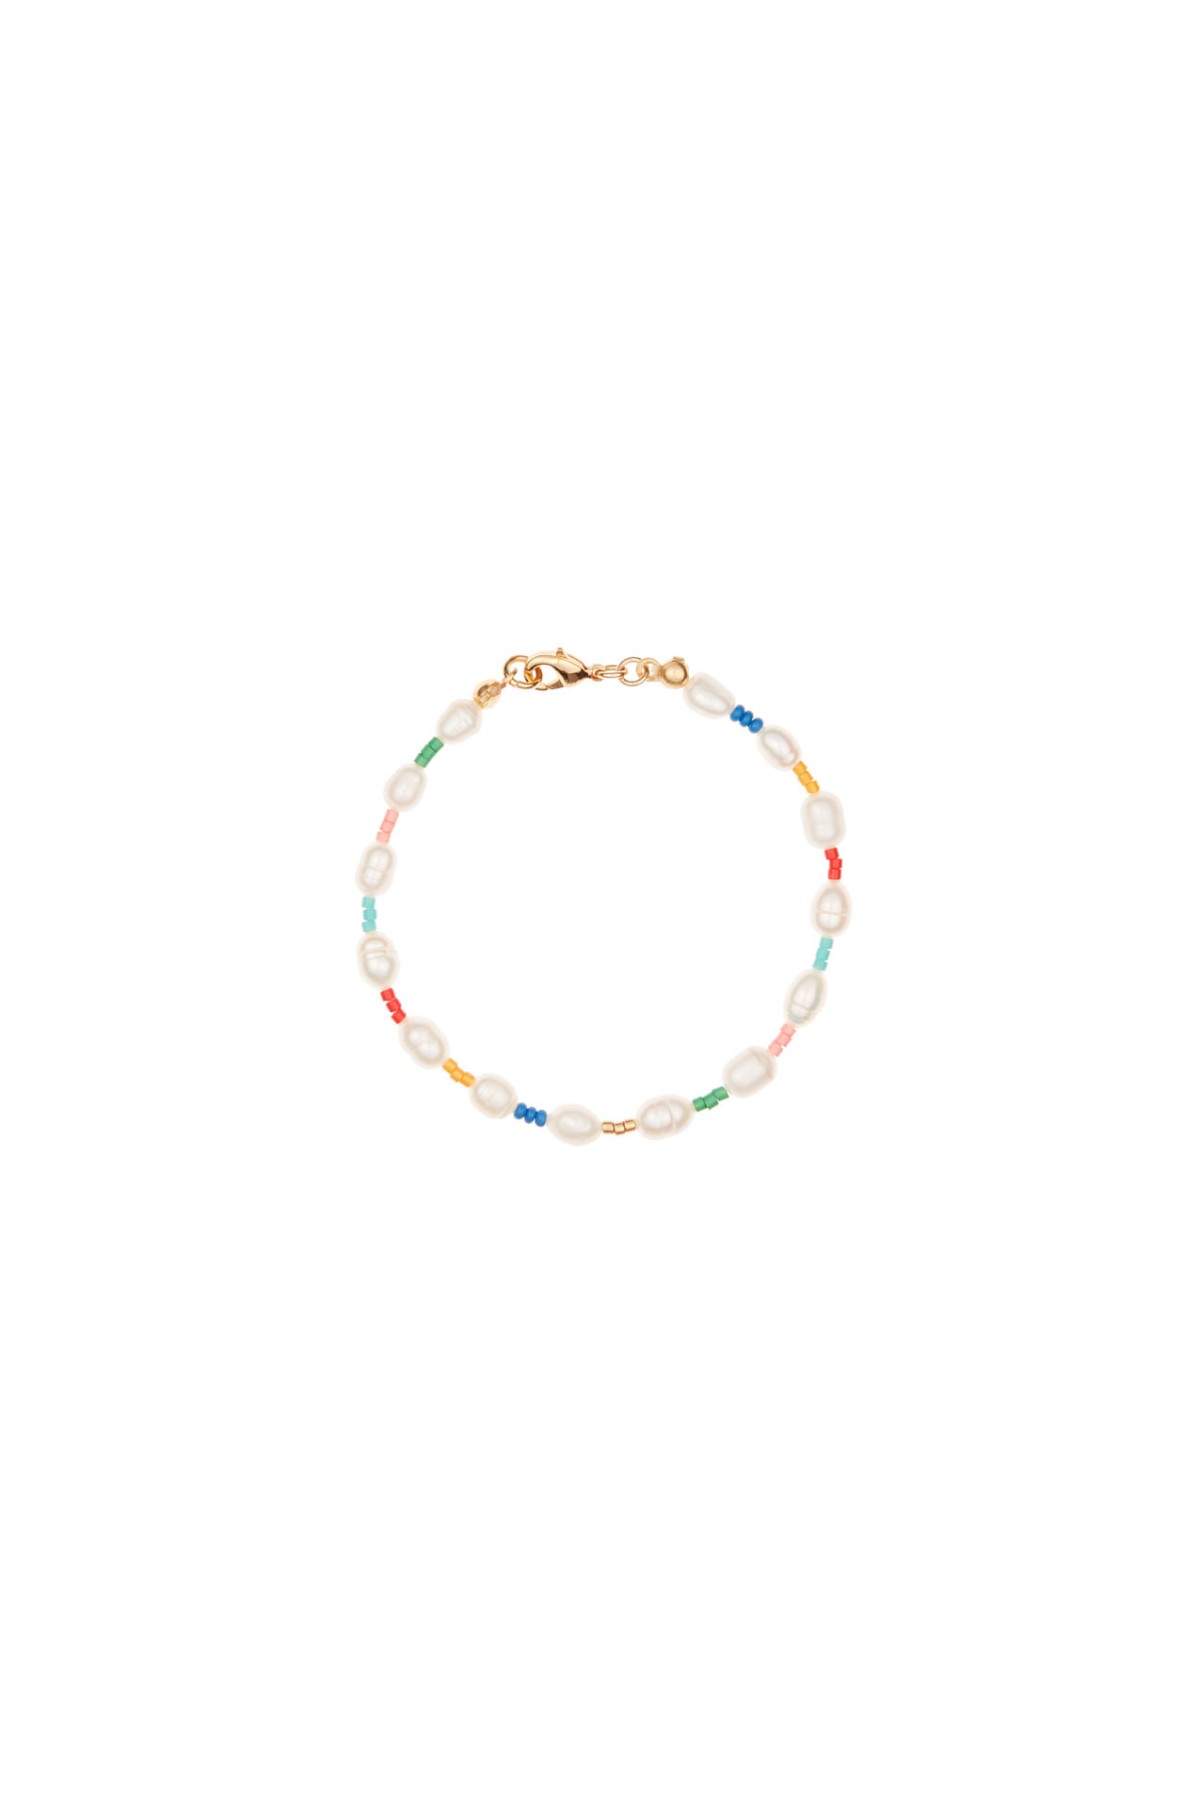 Noronha Pearls Bracelet/Anklet